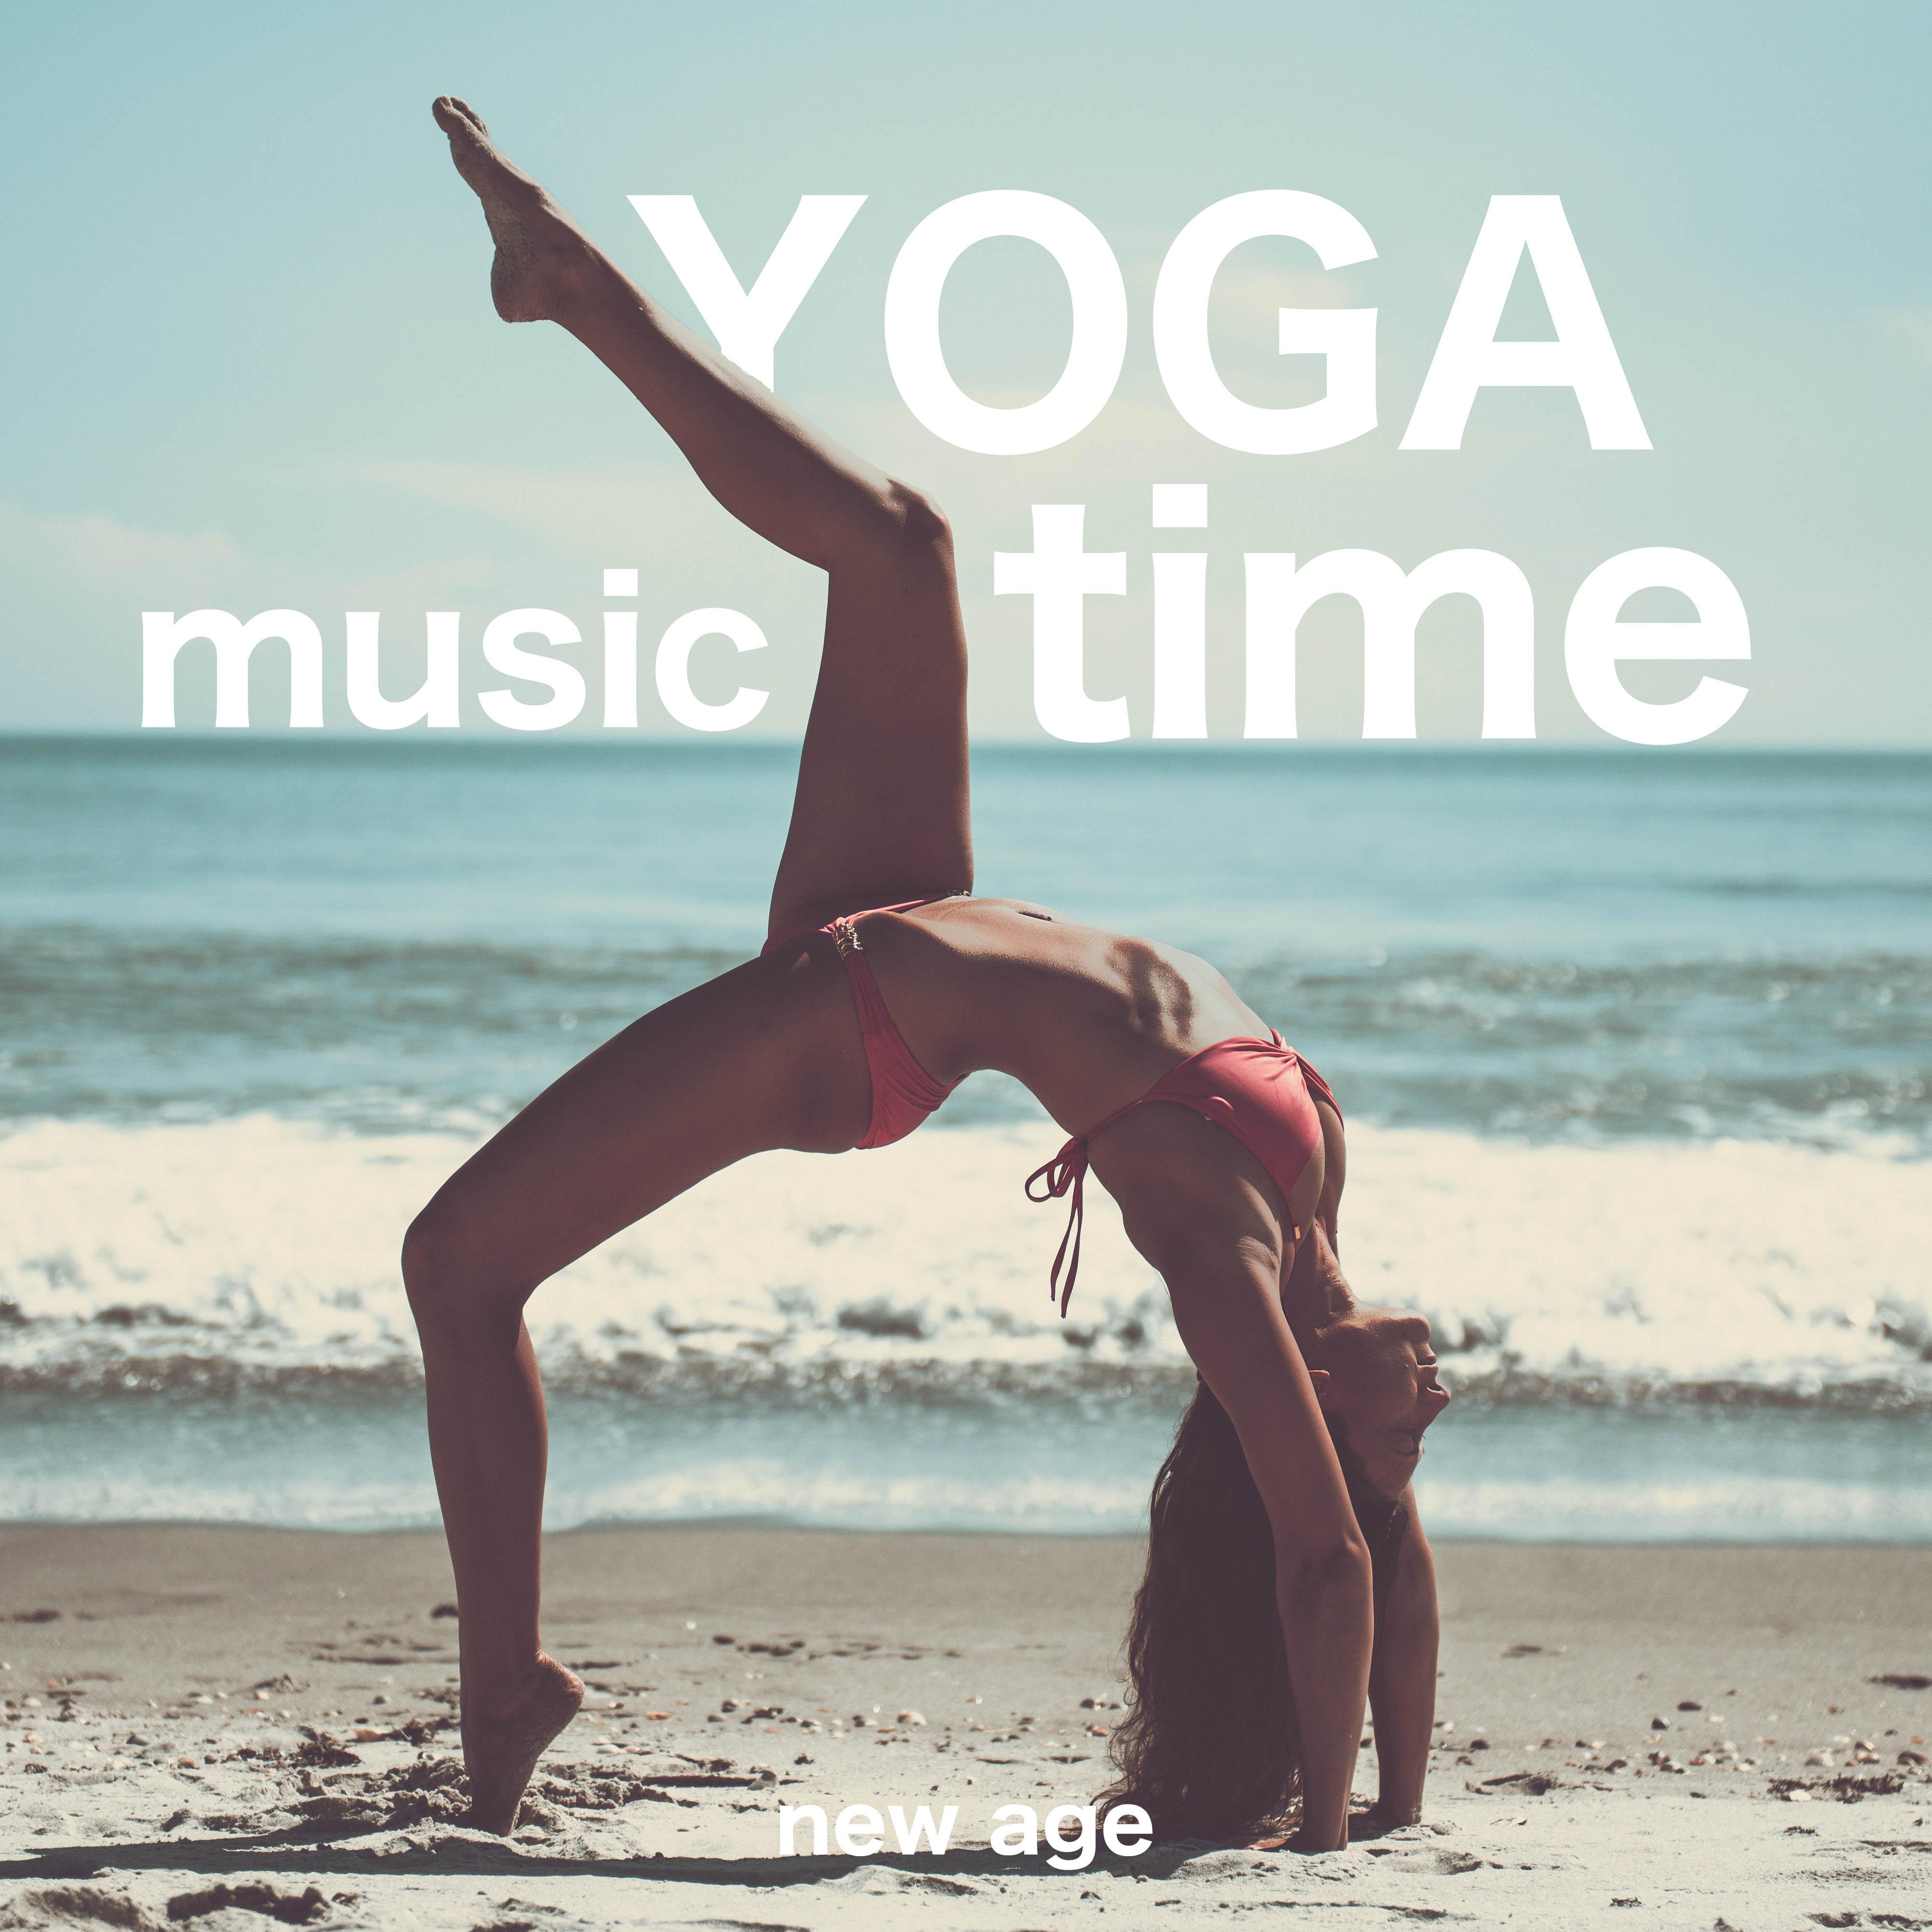 Yoga Time - Canzoni Strumentali Asiatiche per Lezioni di Yoga o Meditazione